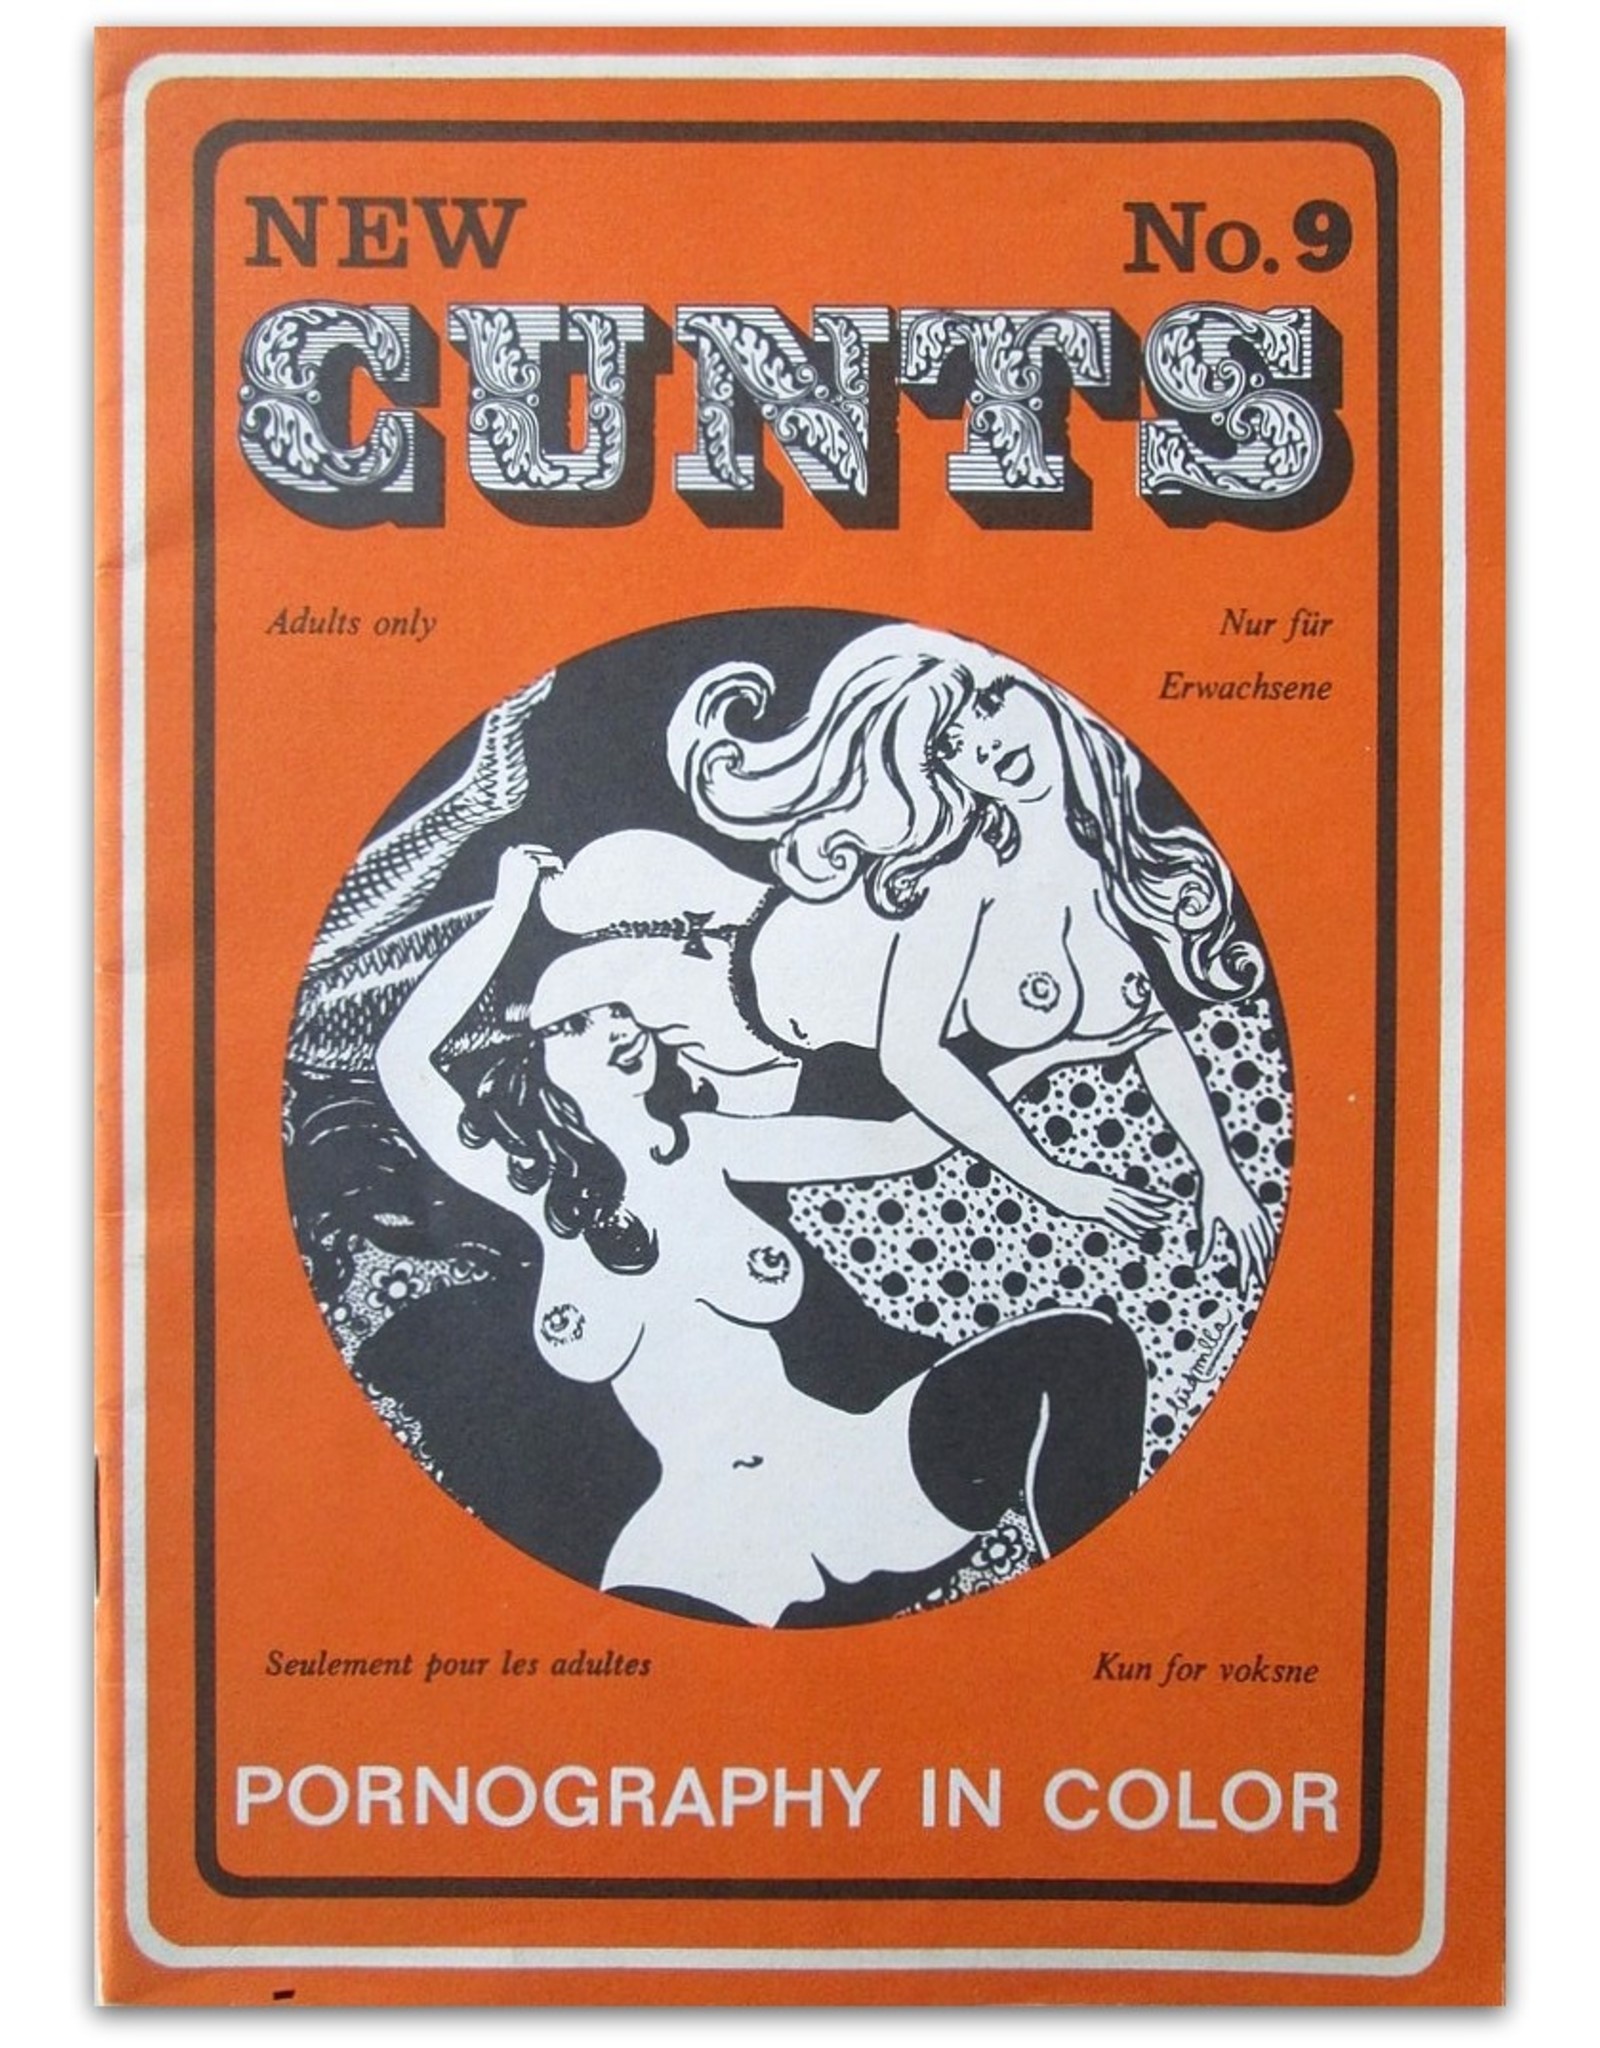 Erik Koskela & Ole Christiansen [ed.] - New Cunts No. 9. Pornography in Color. Adults only / Nur für Erwachsene / Seulement pour les adultes / Kun for volksne